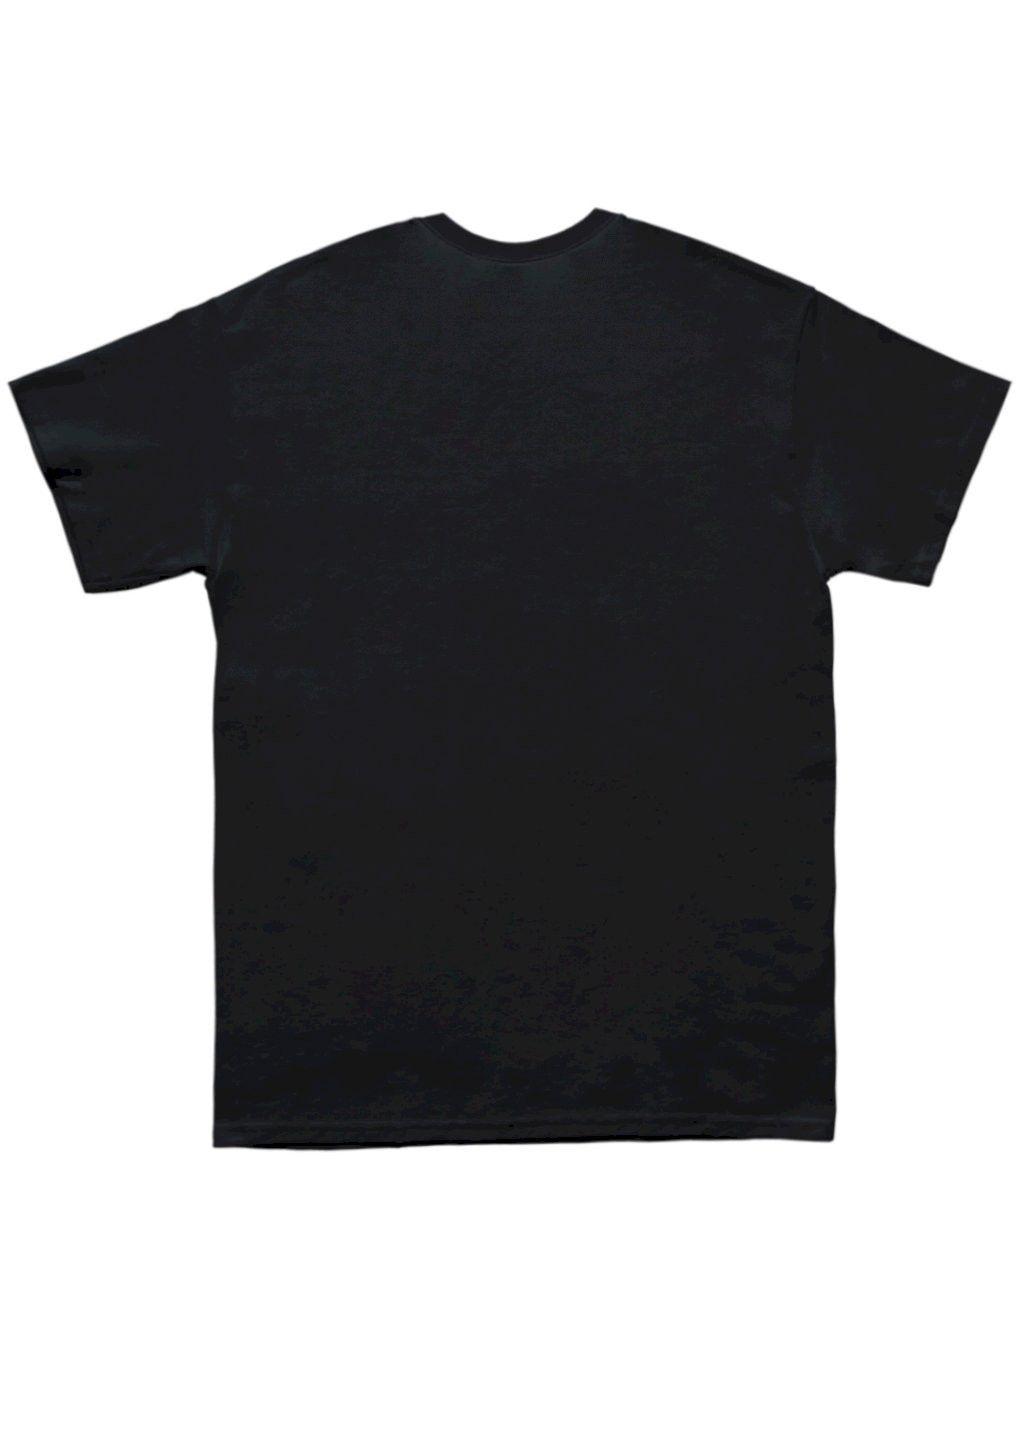 Черная футболка мужская черная "дивись" Trace of Space